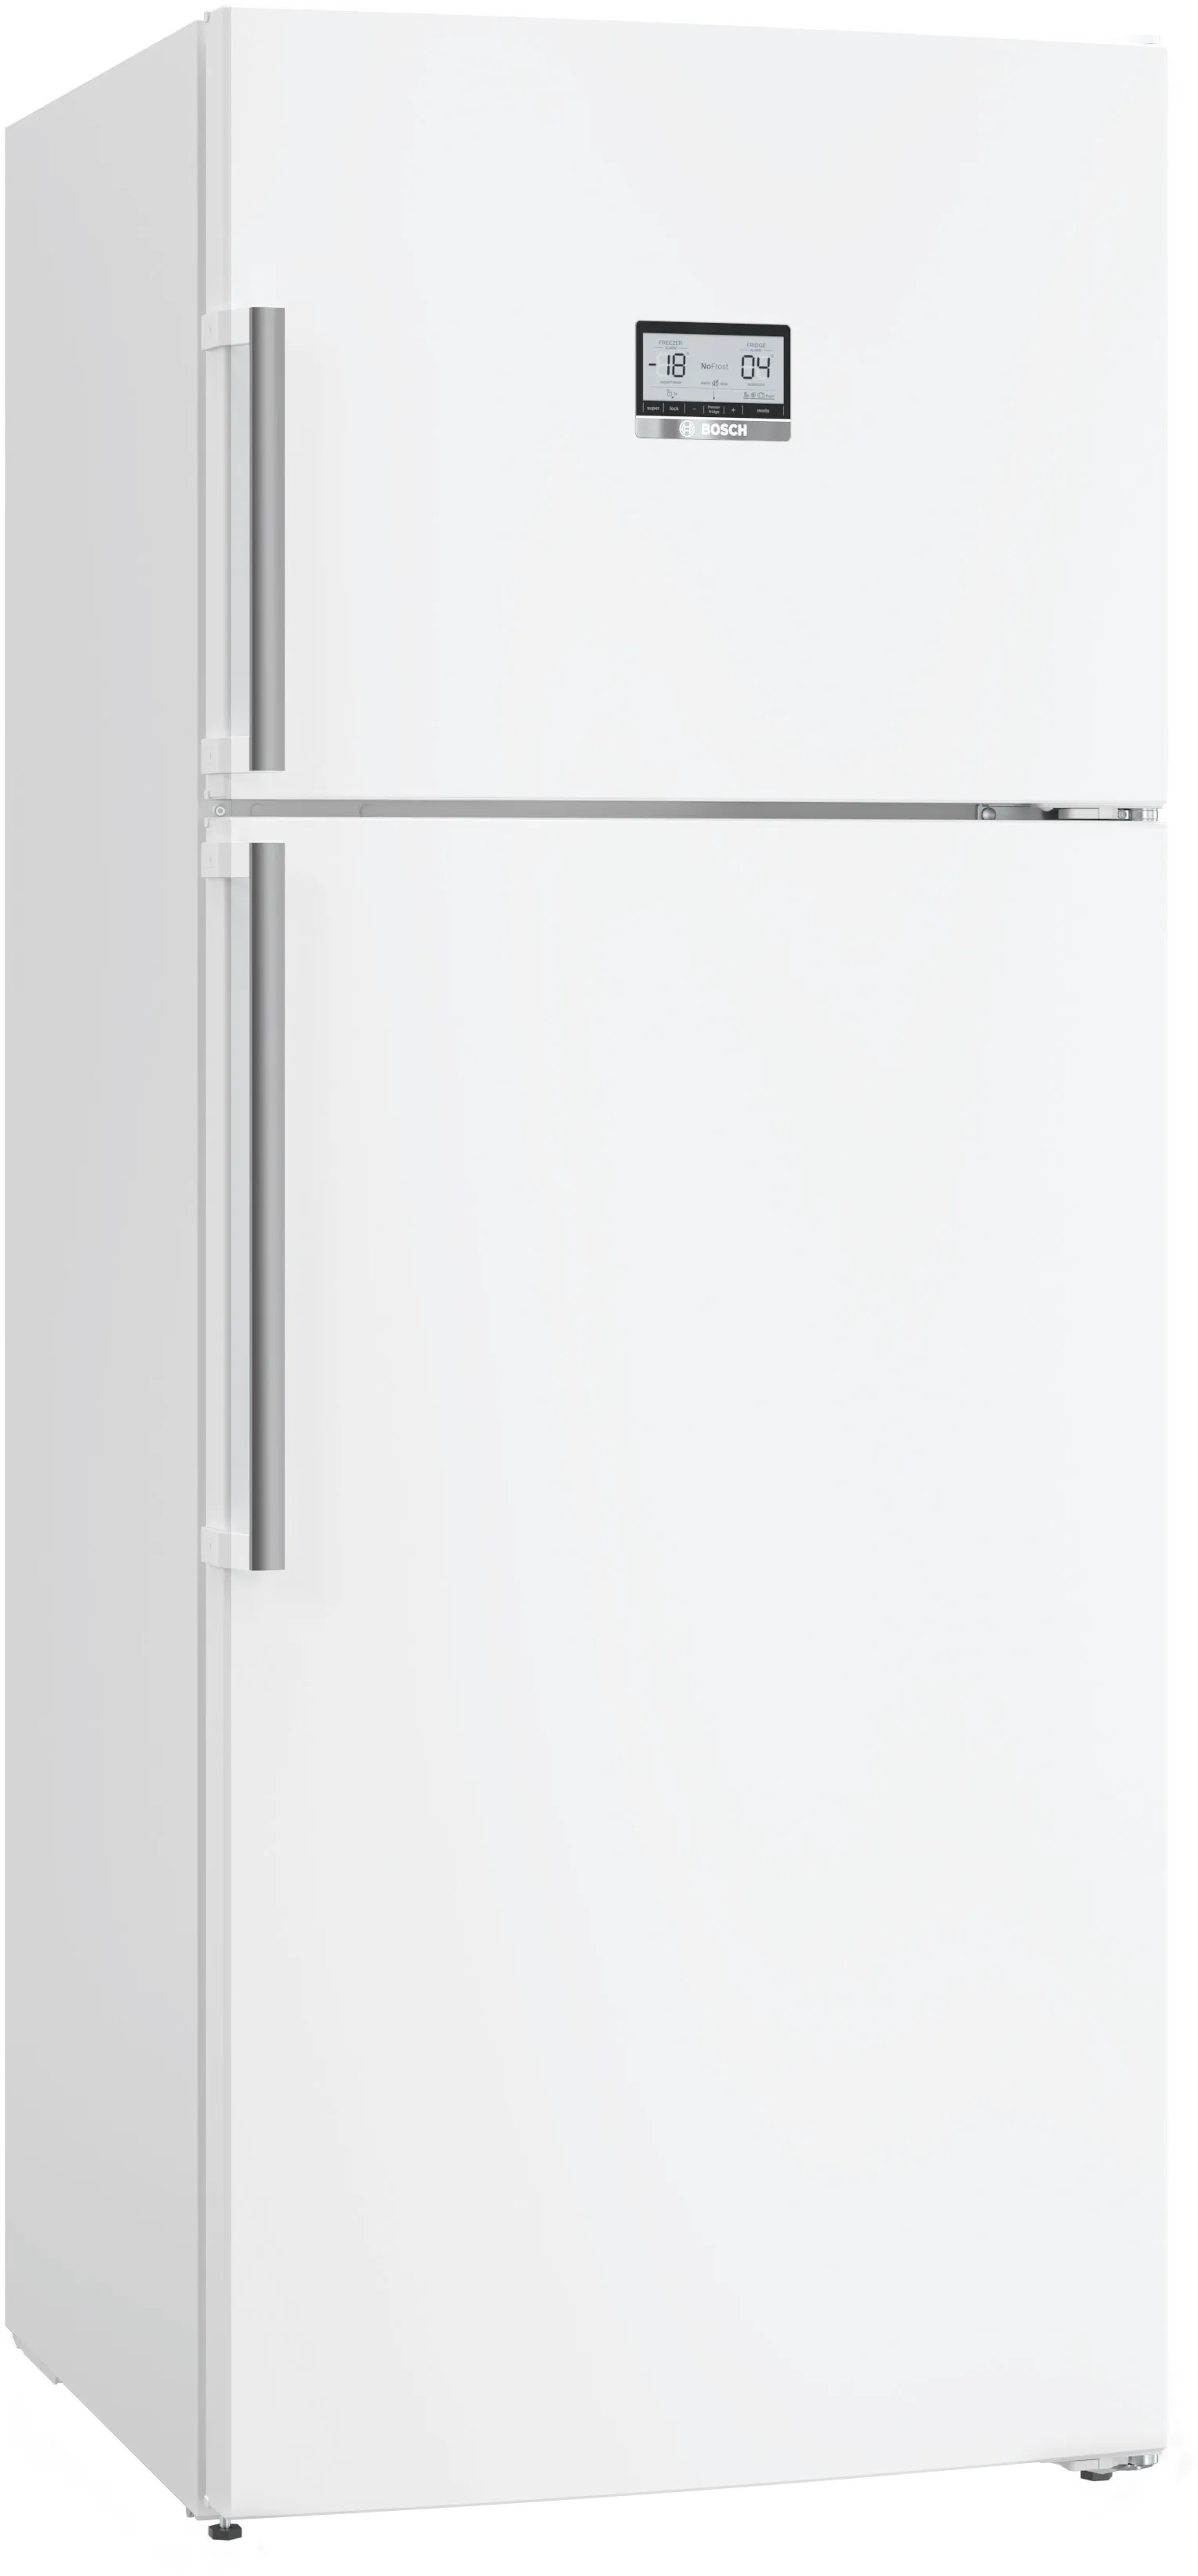 Series 6 free-standing fridge-freezer with freezer at top 186 x 75 cm White 